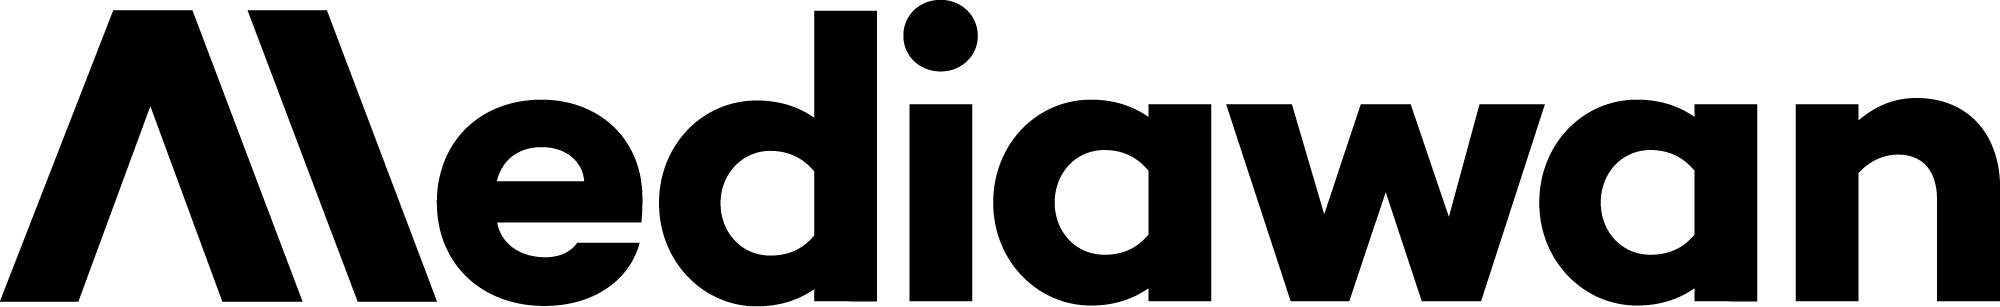 Mediawan Logo